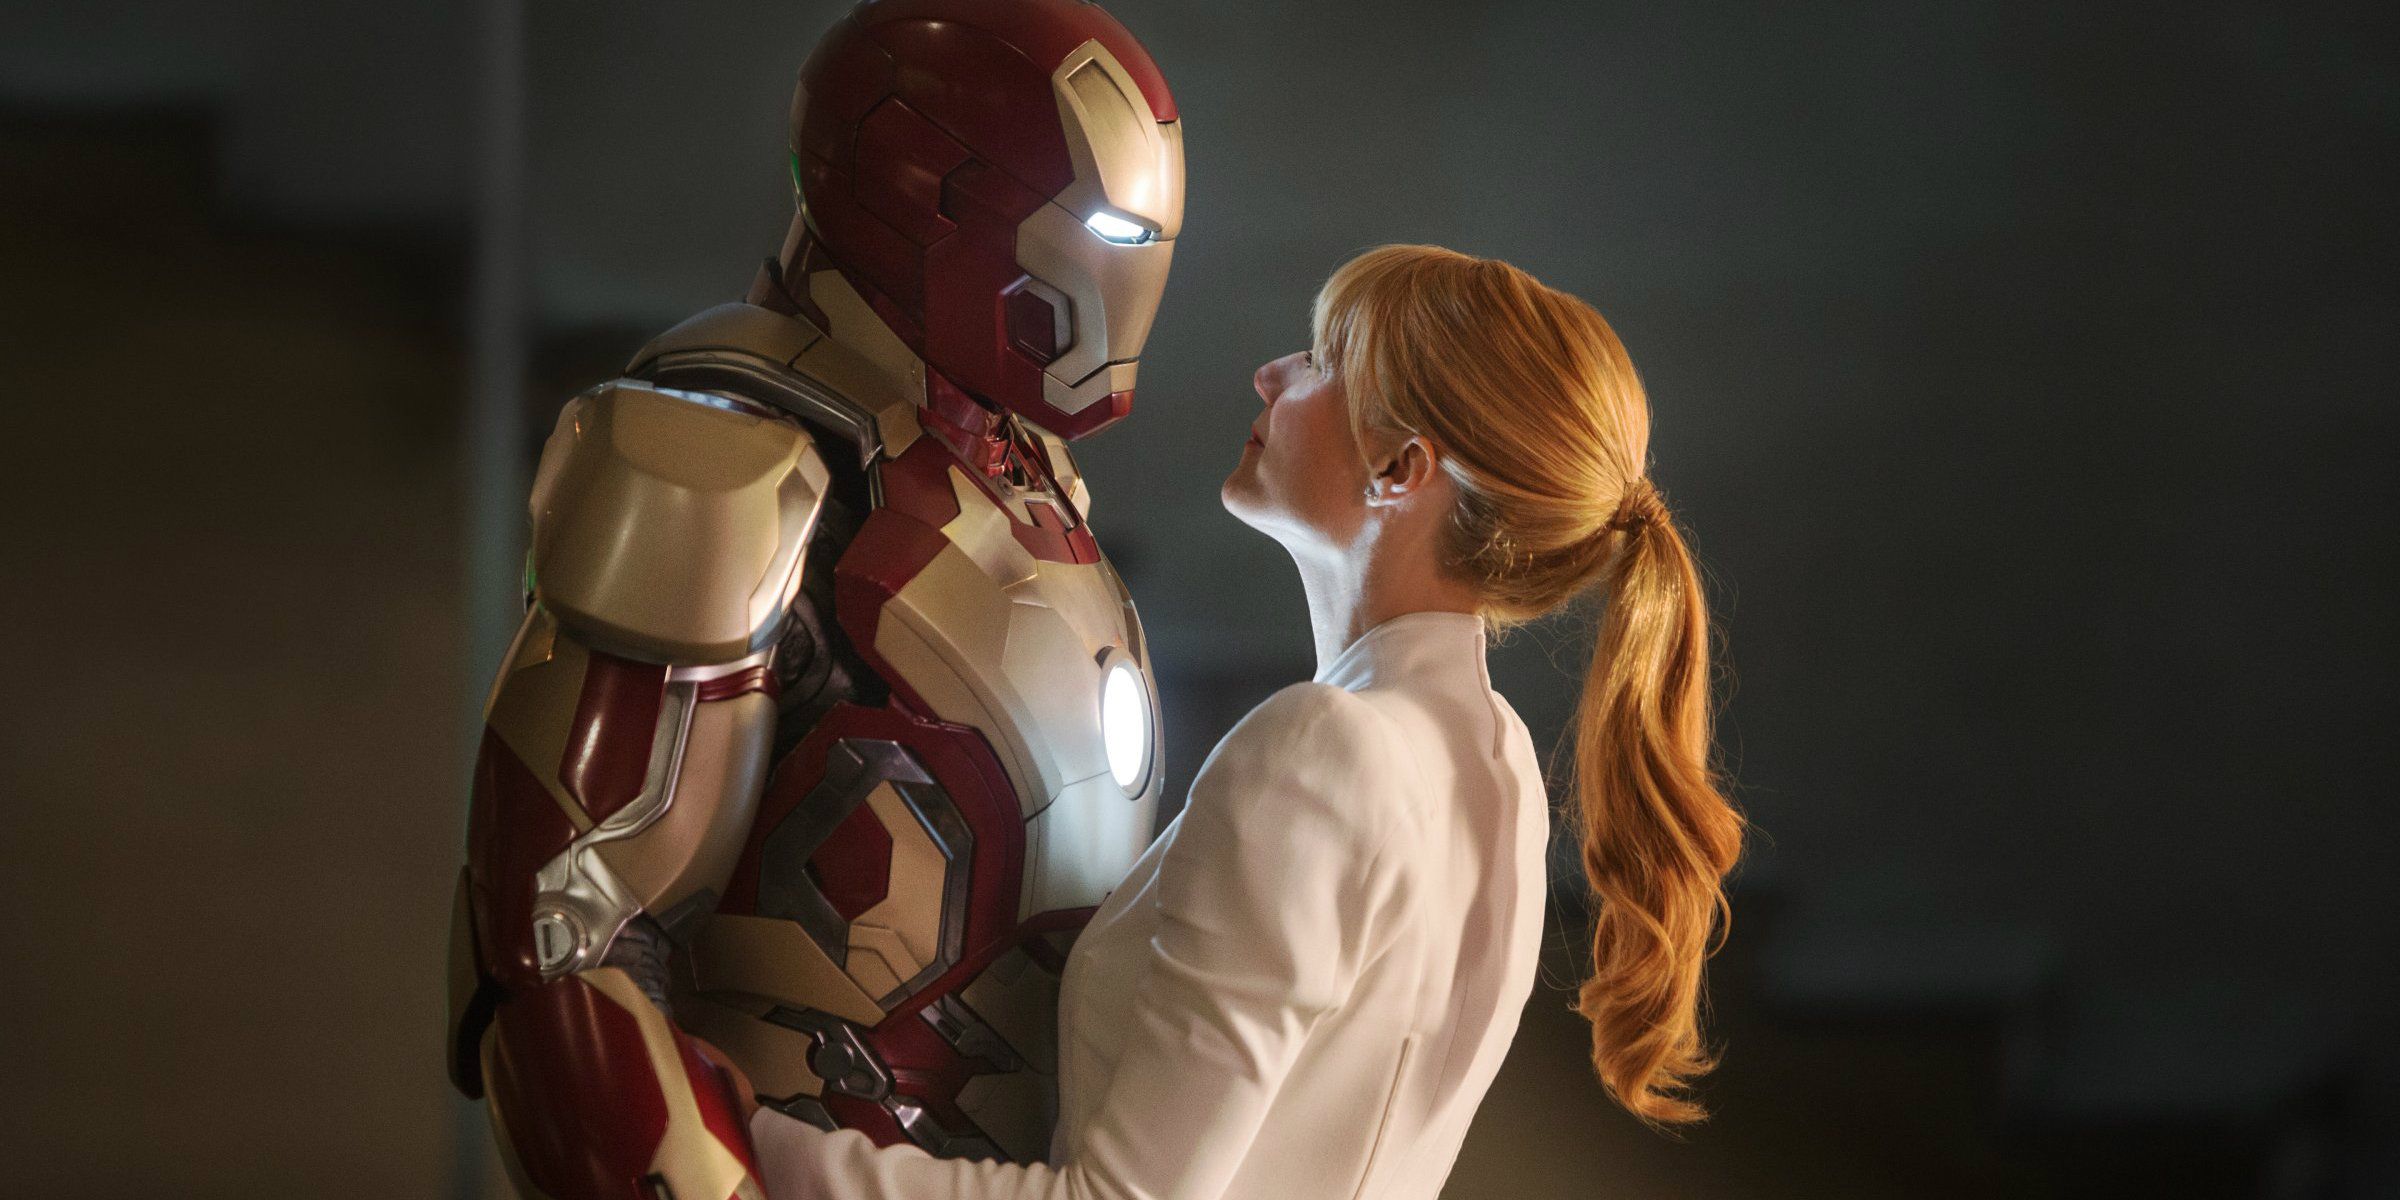 Pepper Potts talking to Tony in Iron Man 3